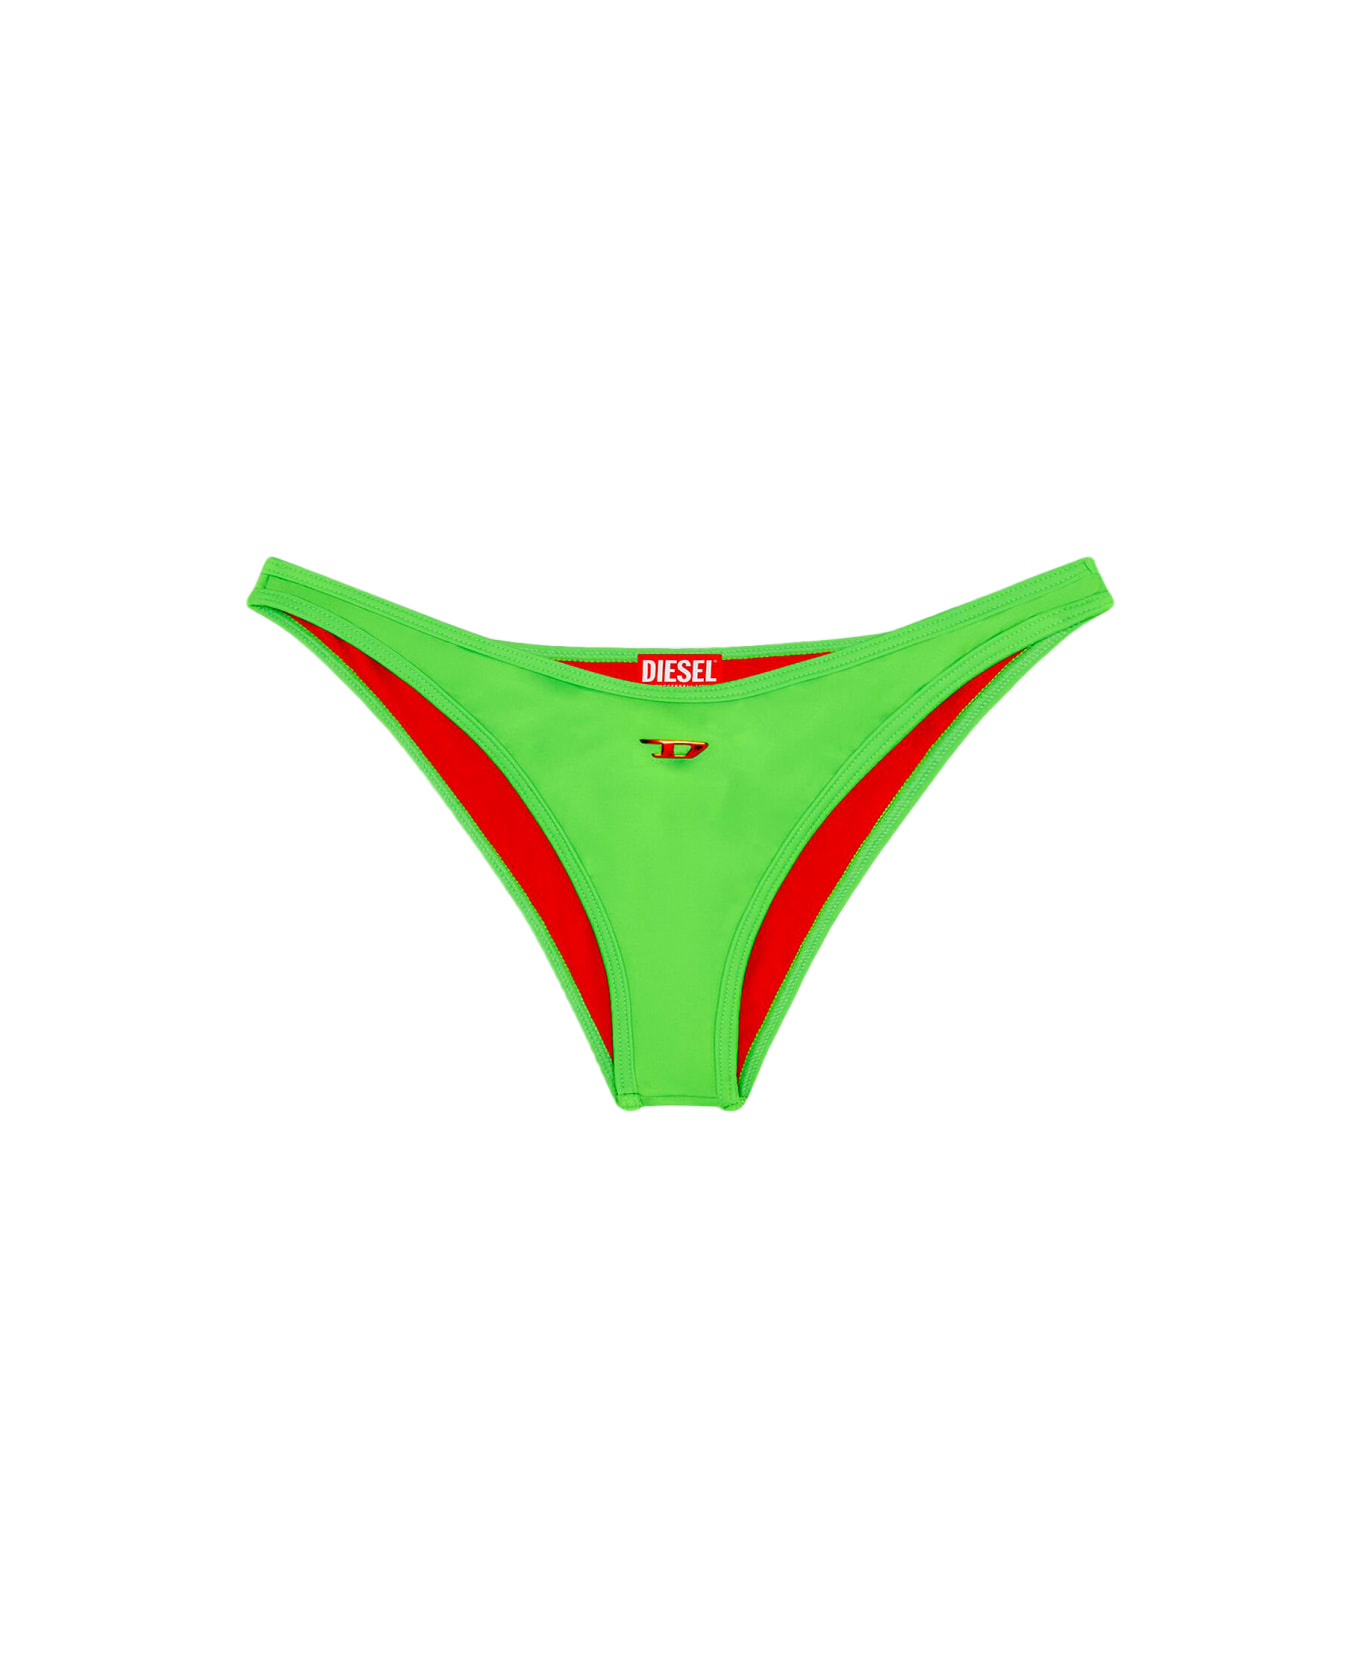 Diesel 'bfpn-punchy-x' Swimsuit Bottom - Verde fluo